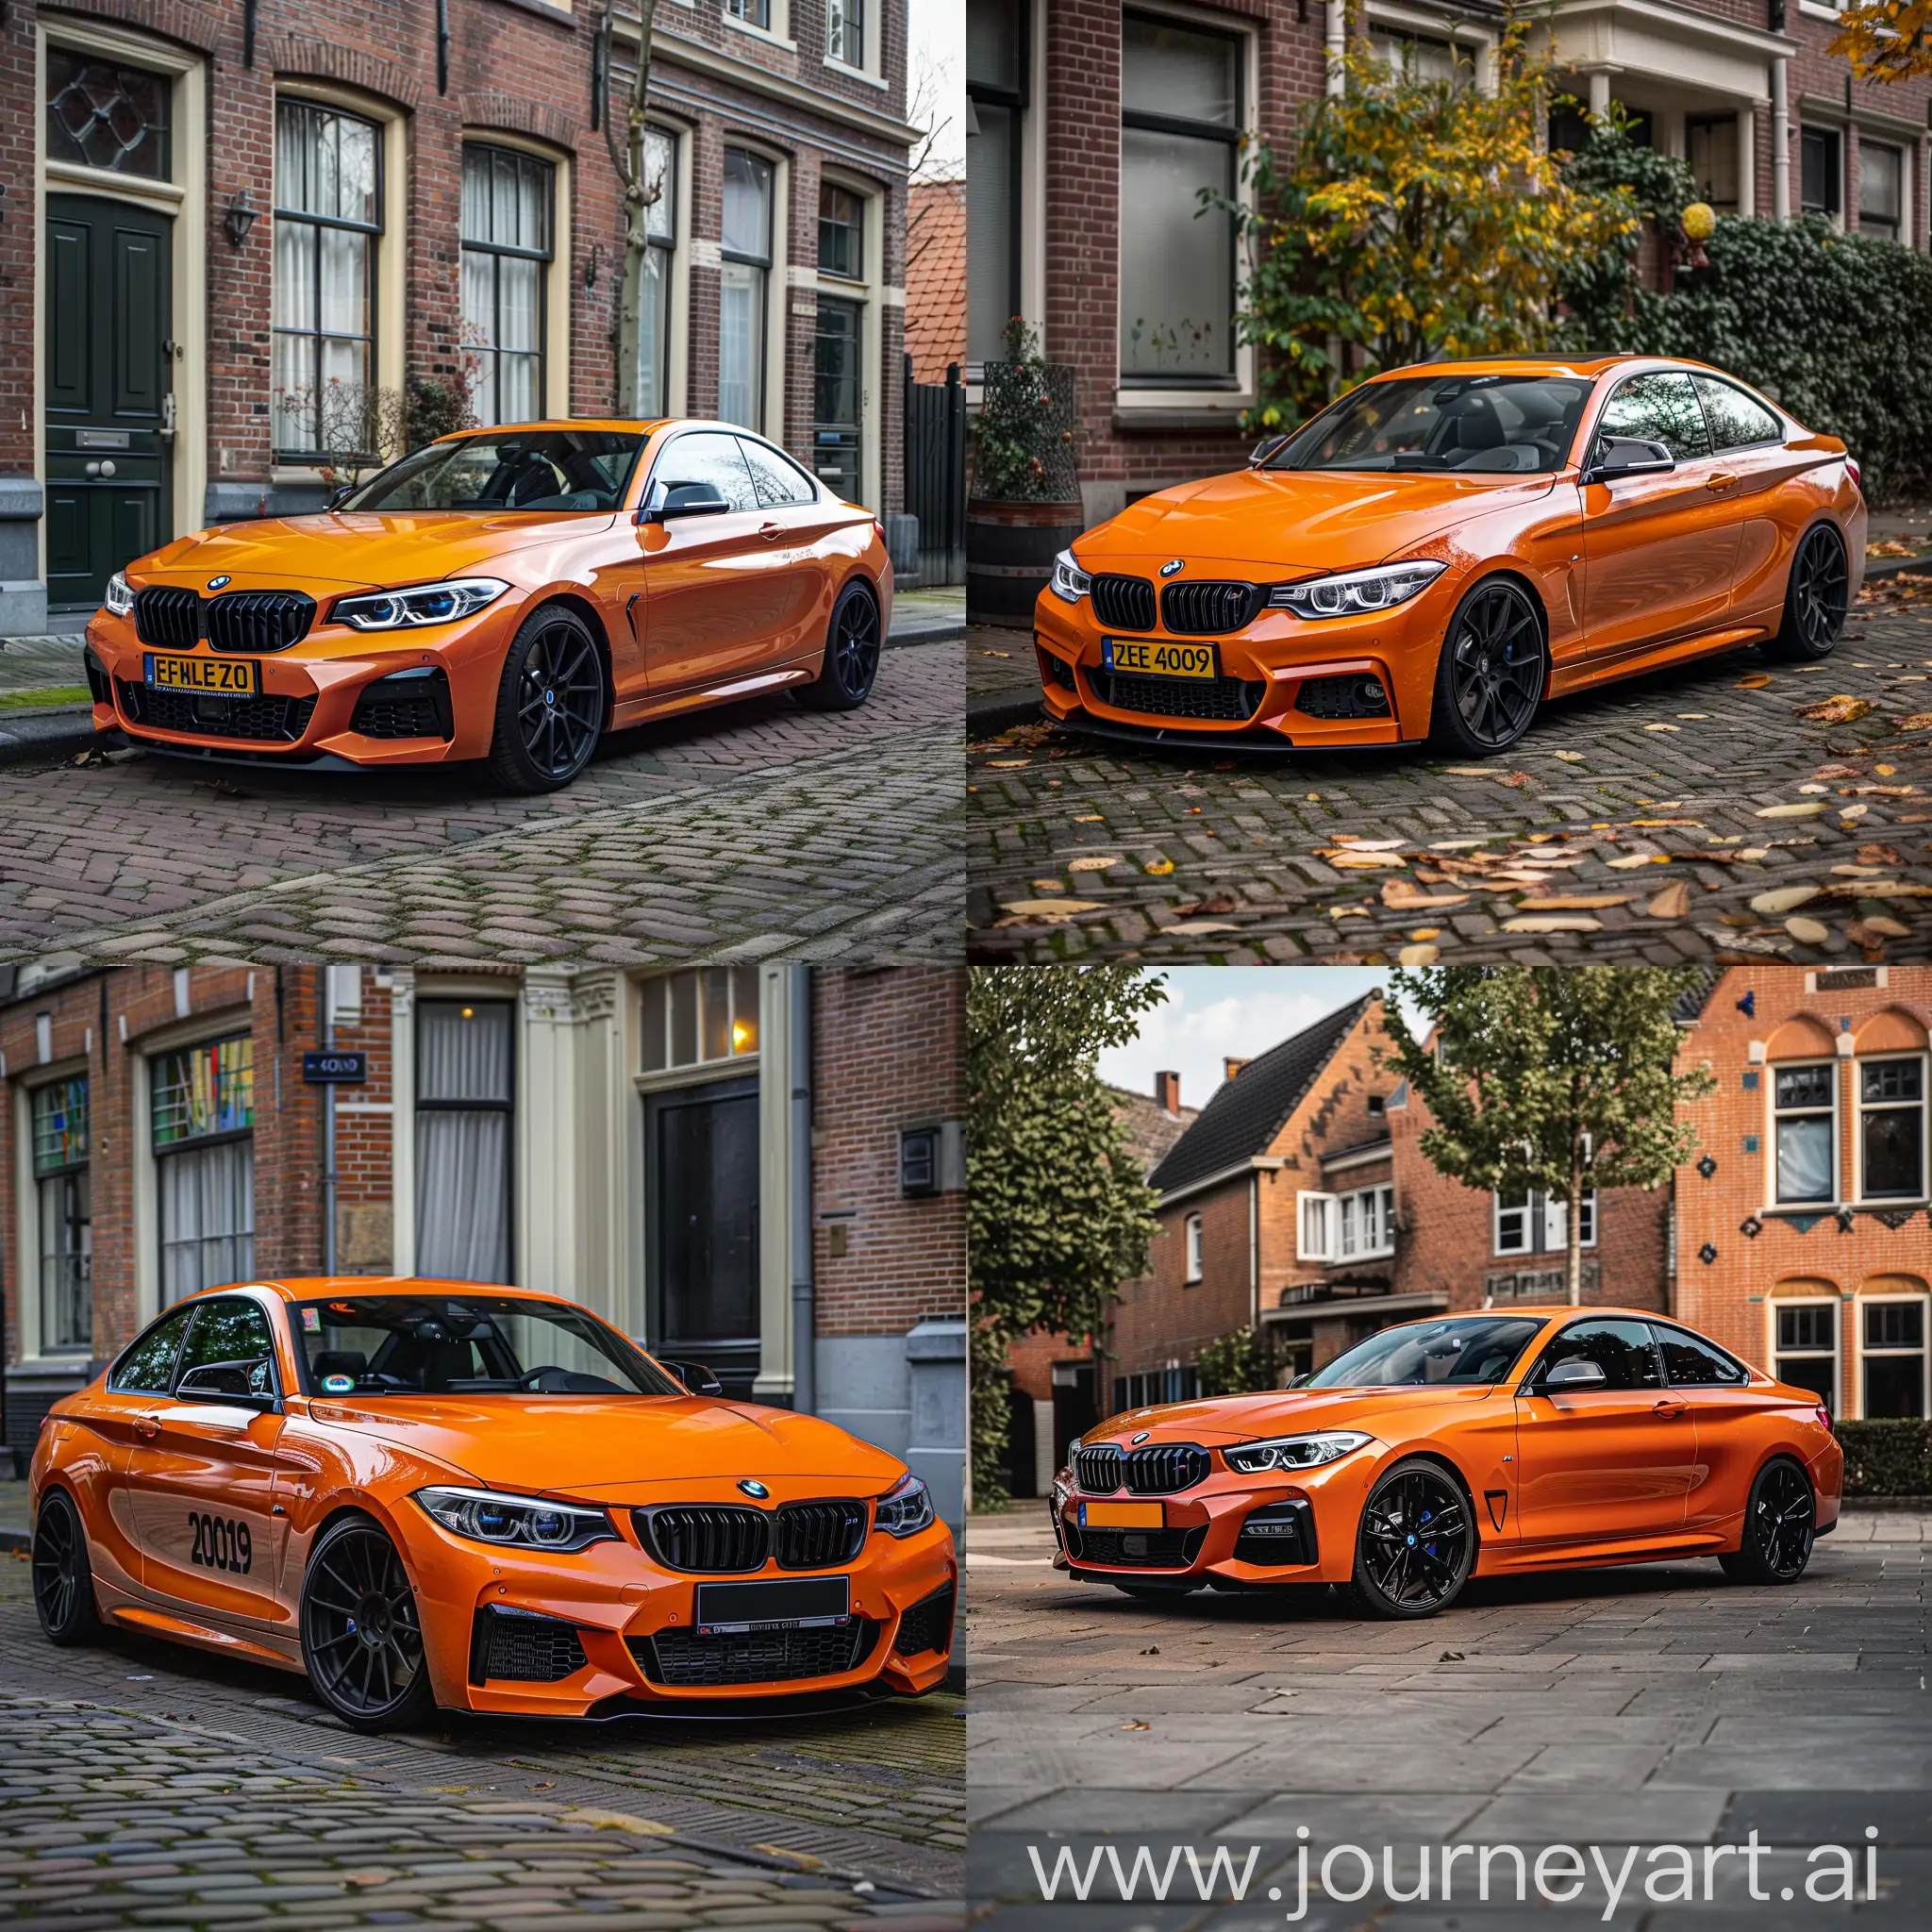 Sleek-BMW-M140i-in-Vibrant-Orange-with-Original-Tune-and-Black-Alloy-Wheels-RealLife-Footage-from-Terneuzen-Zeeland-Netherlands